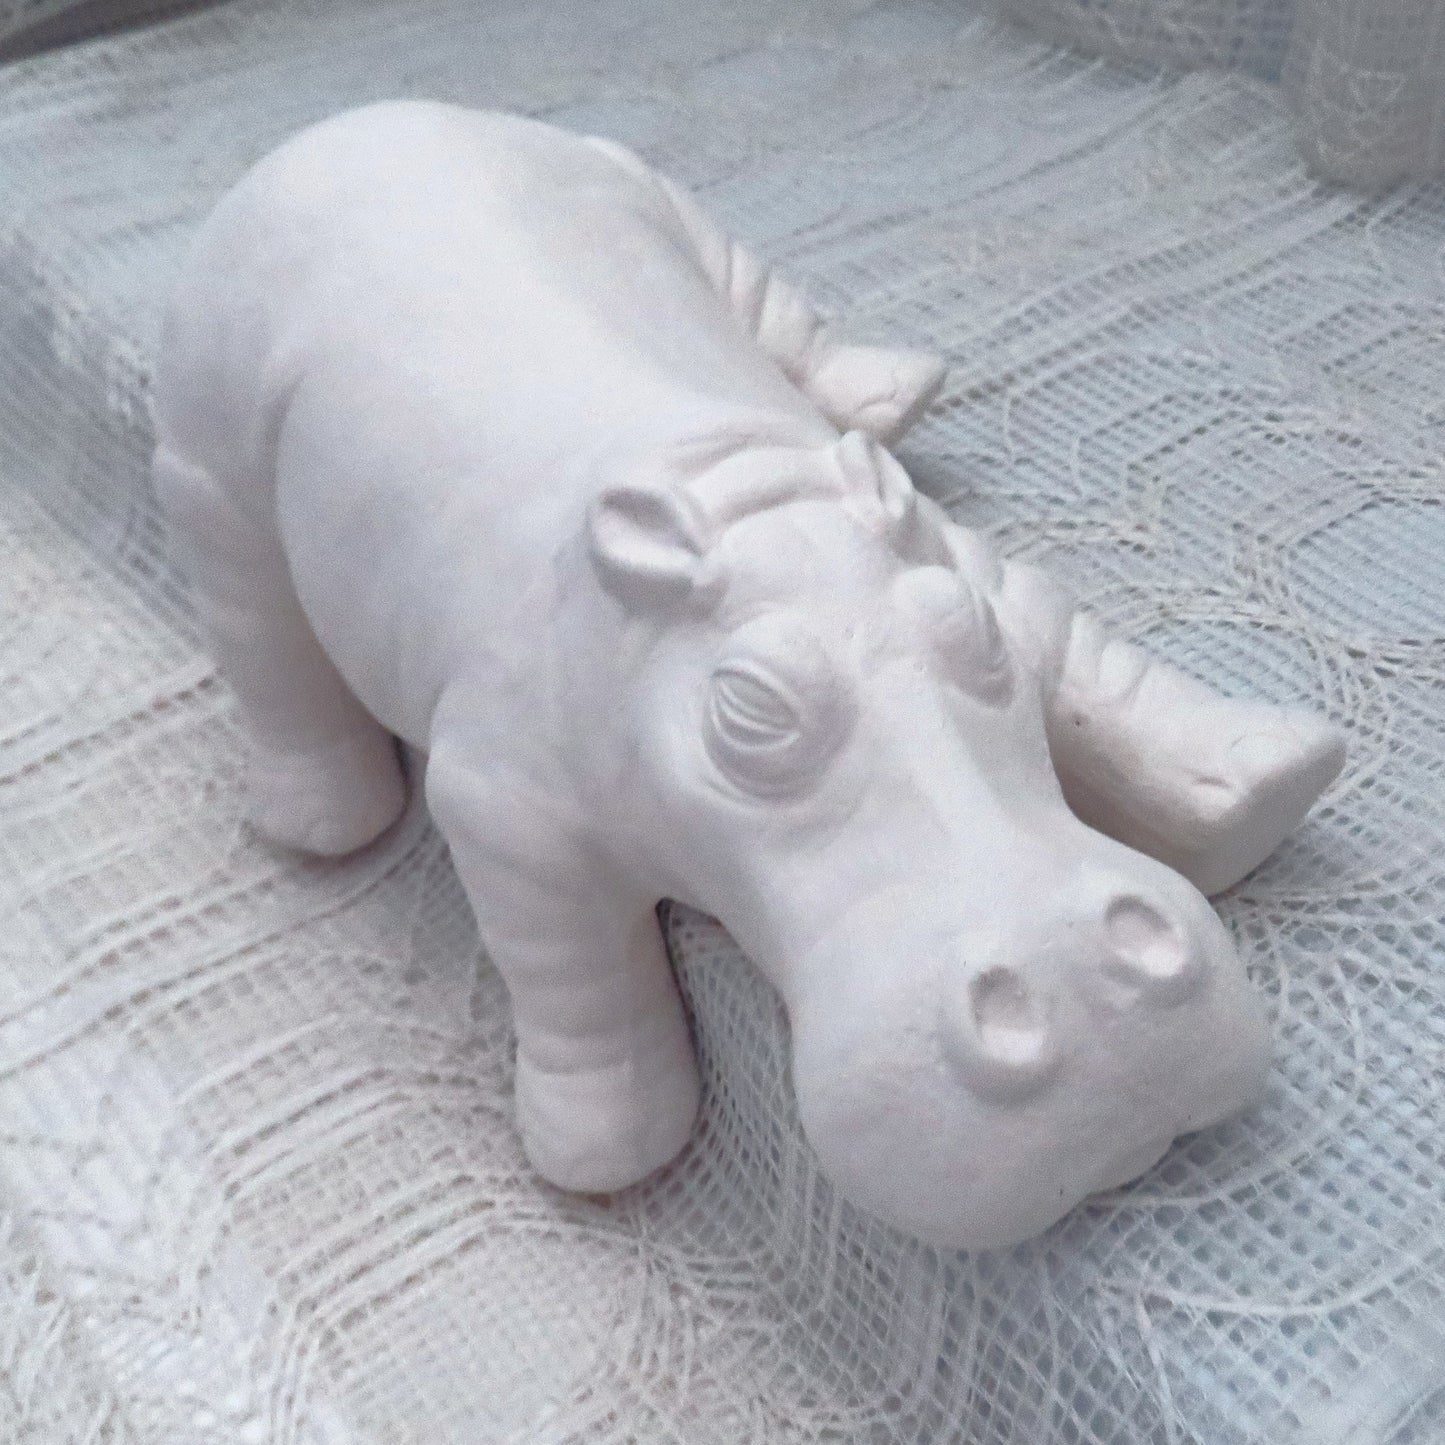 Unpainted Ceramic Hippo Figurine / Bisqueware / Ceramics to Paint / Paintable Ceramics / Hippo Statue / Hippo Decor / Ready to Pain